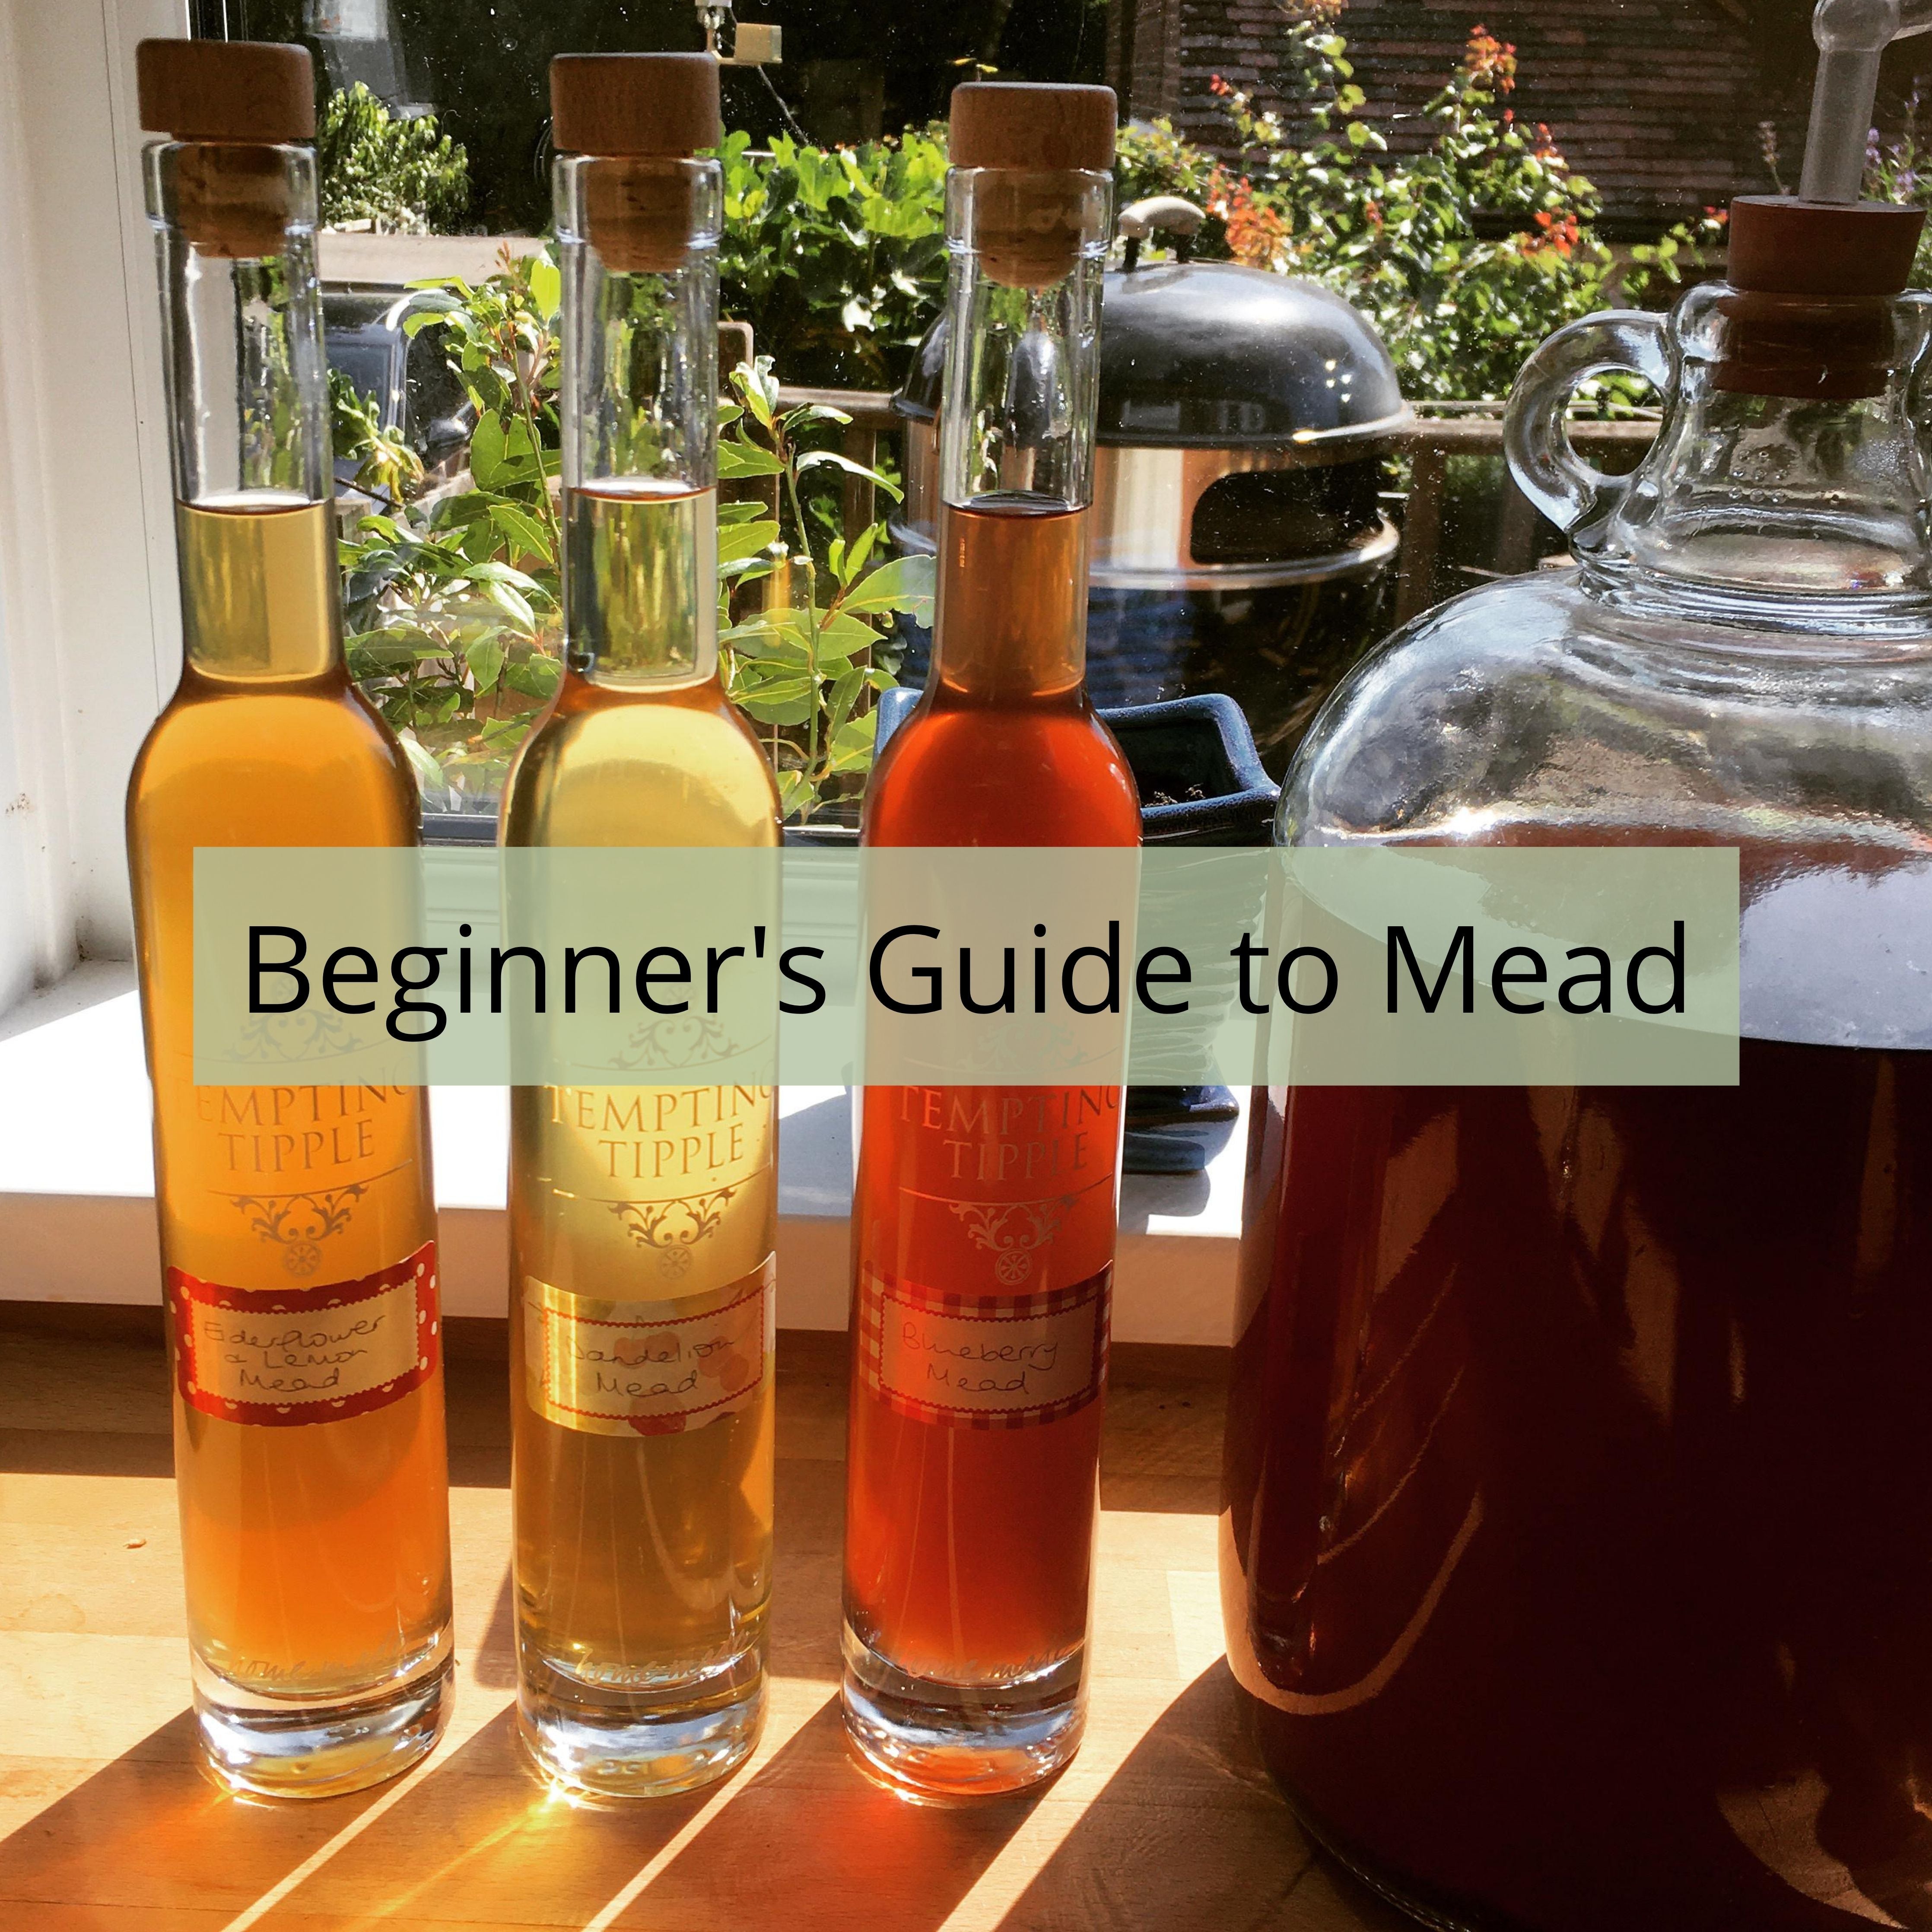 How to Make Milk Jug Mead (Honey Wine) at Home - Delishably